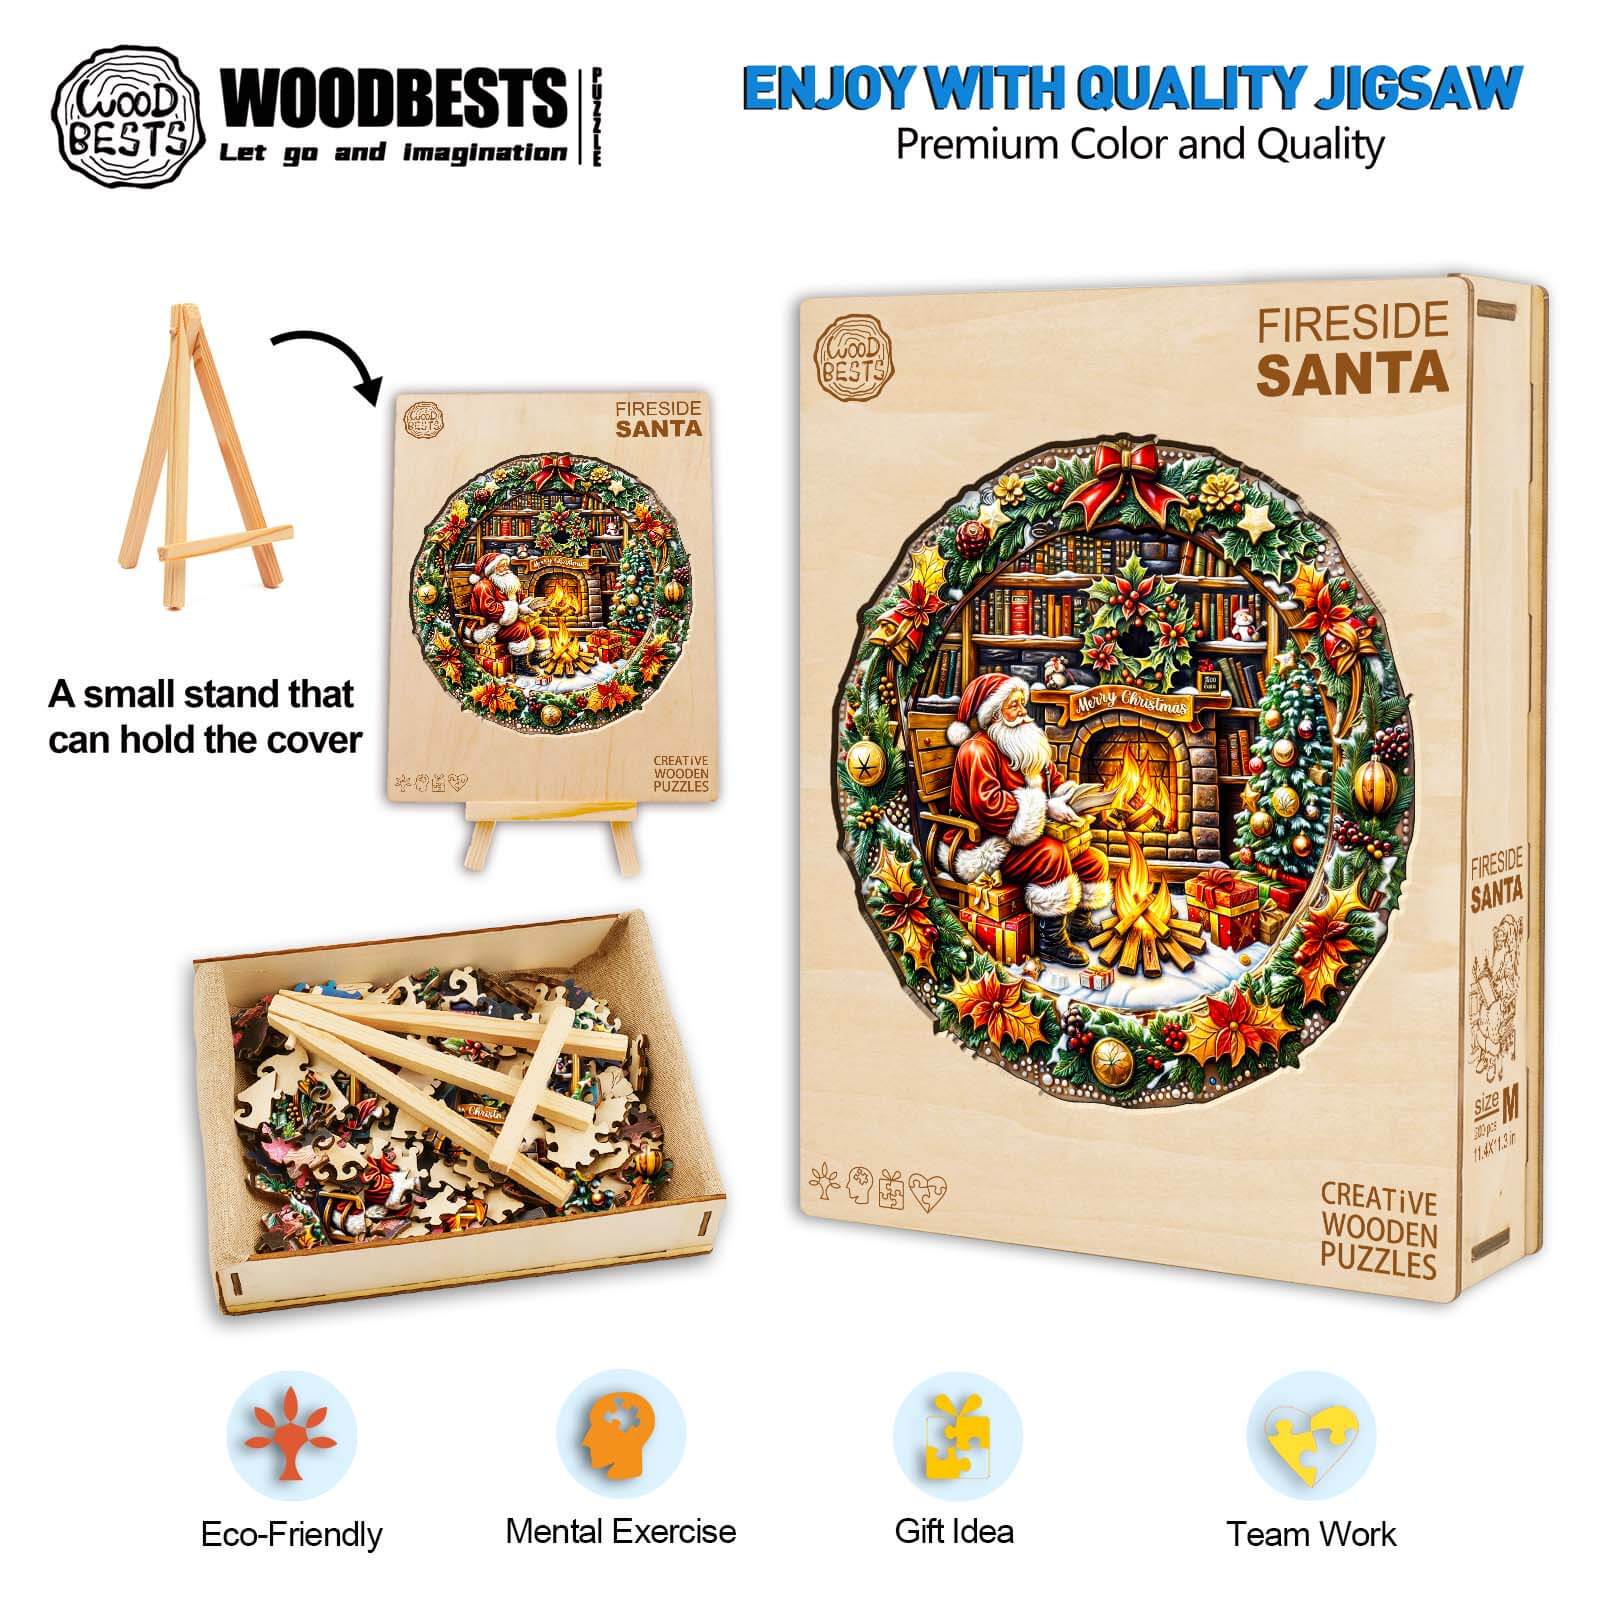 Fireside Santa Wooden Jigsaw Puzzle